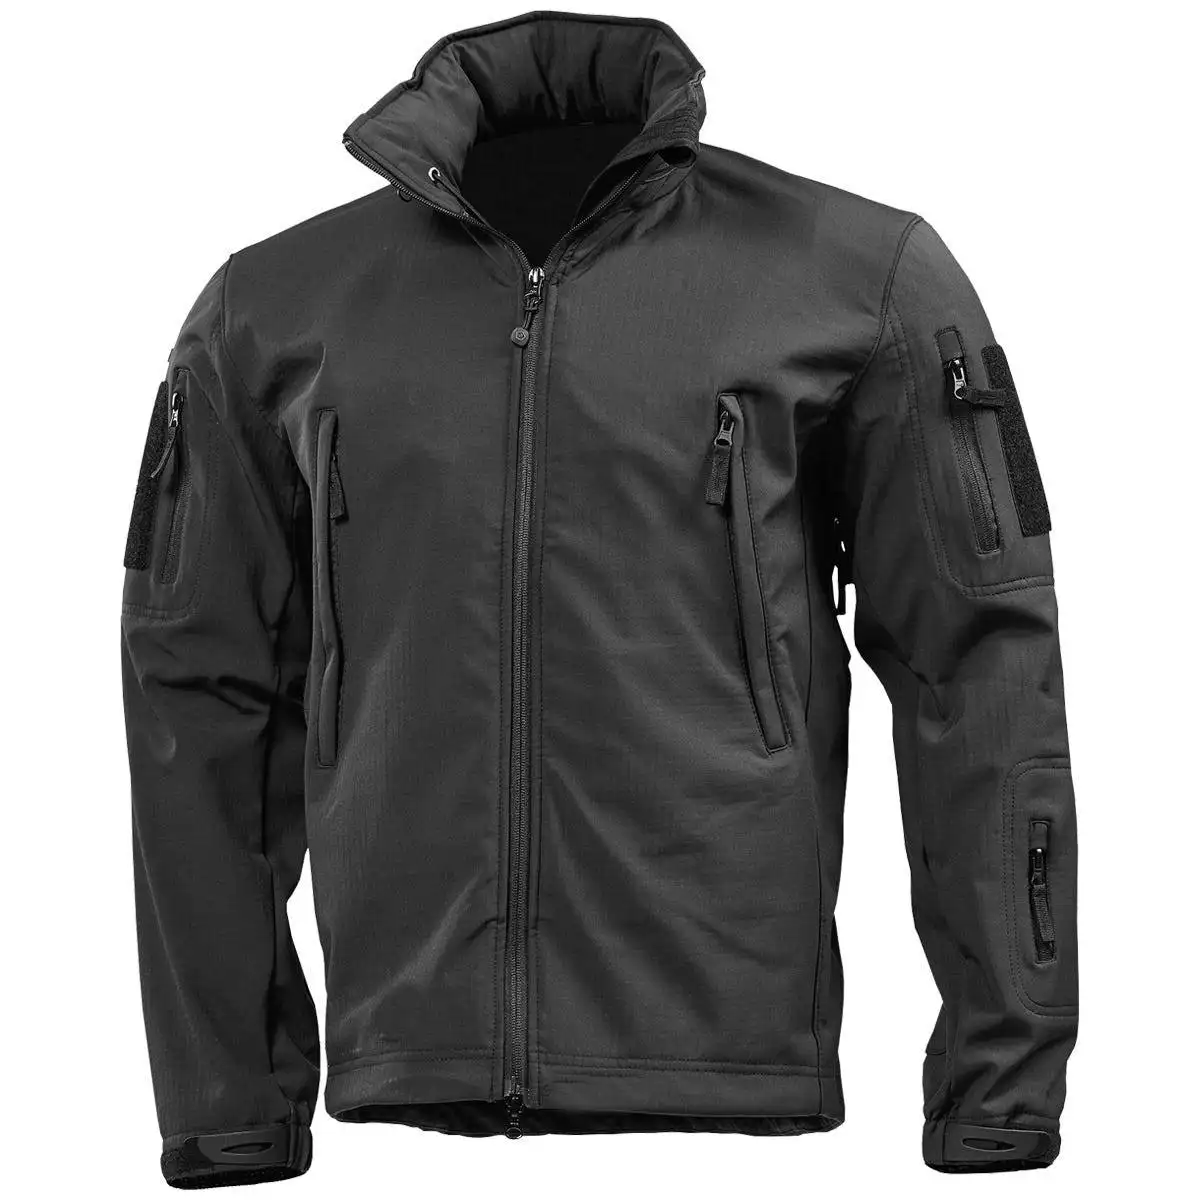 Camping Outdoor jacket Waterproof Windproof hard shell Polyester Coat Fleece Design Windbreaker Jacket For Men